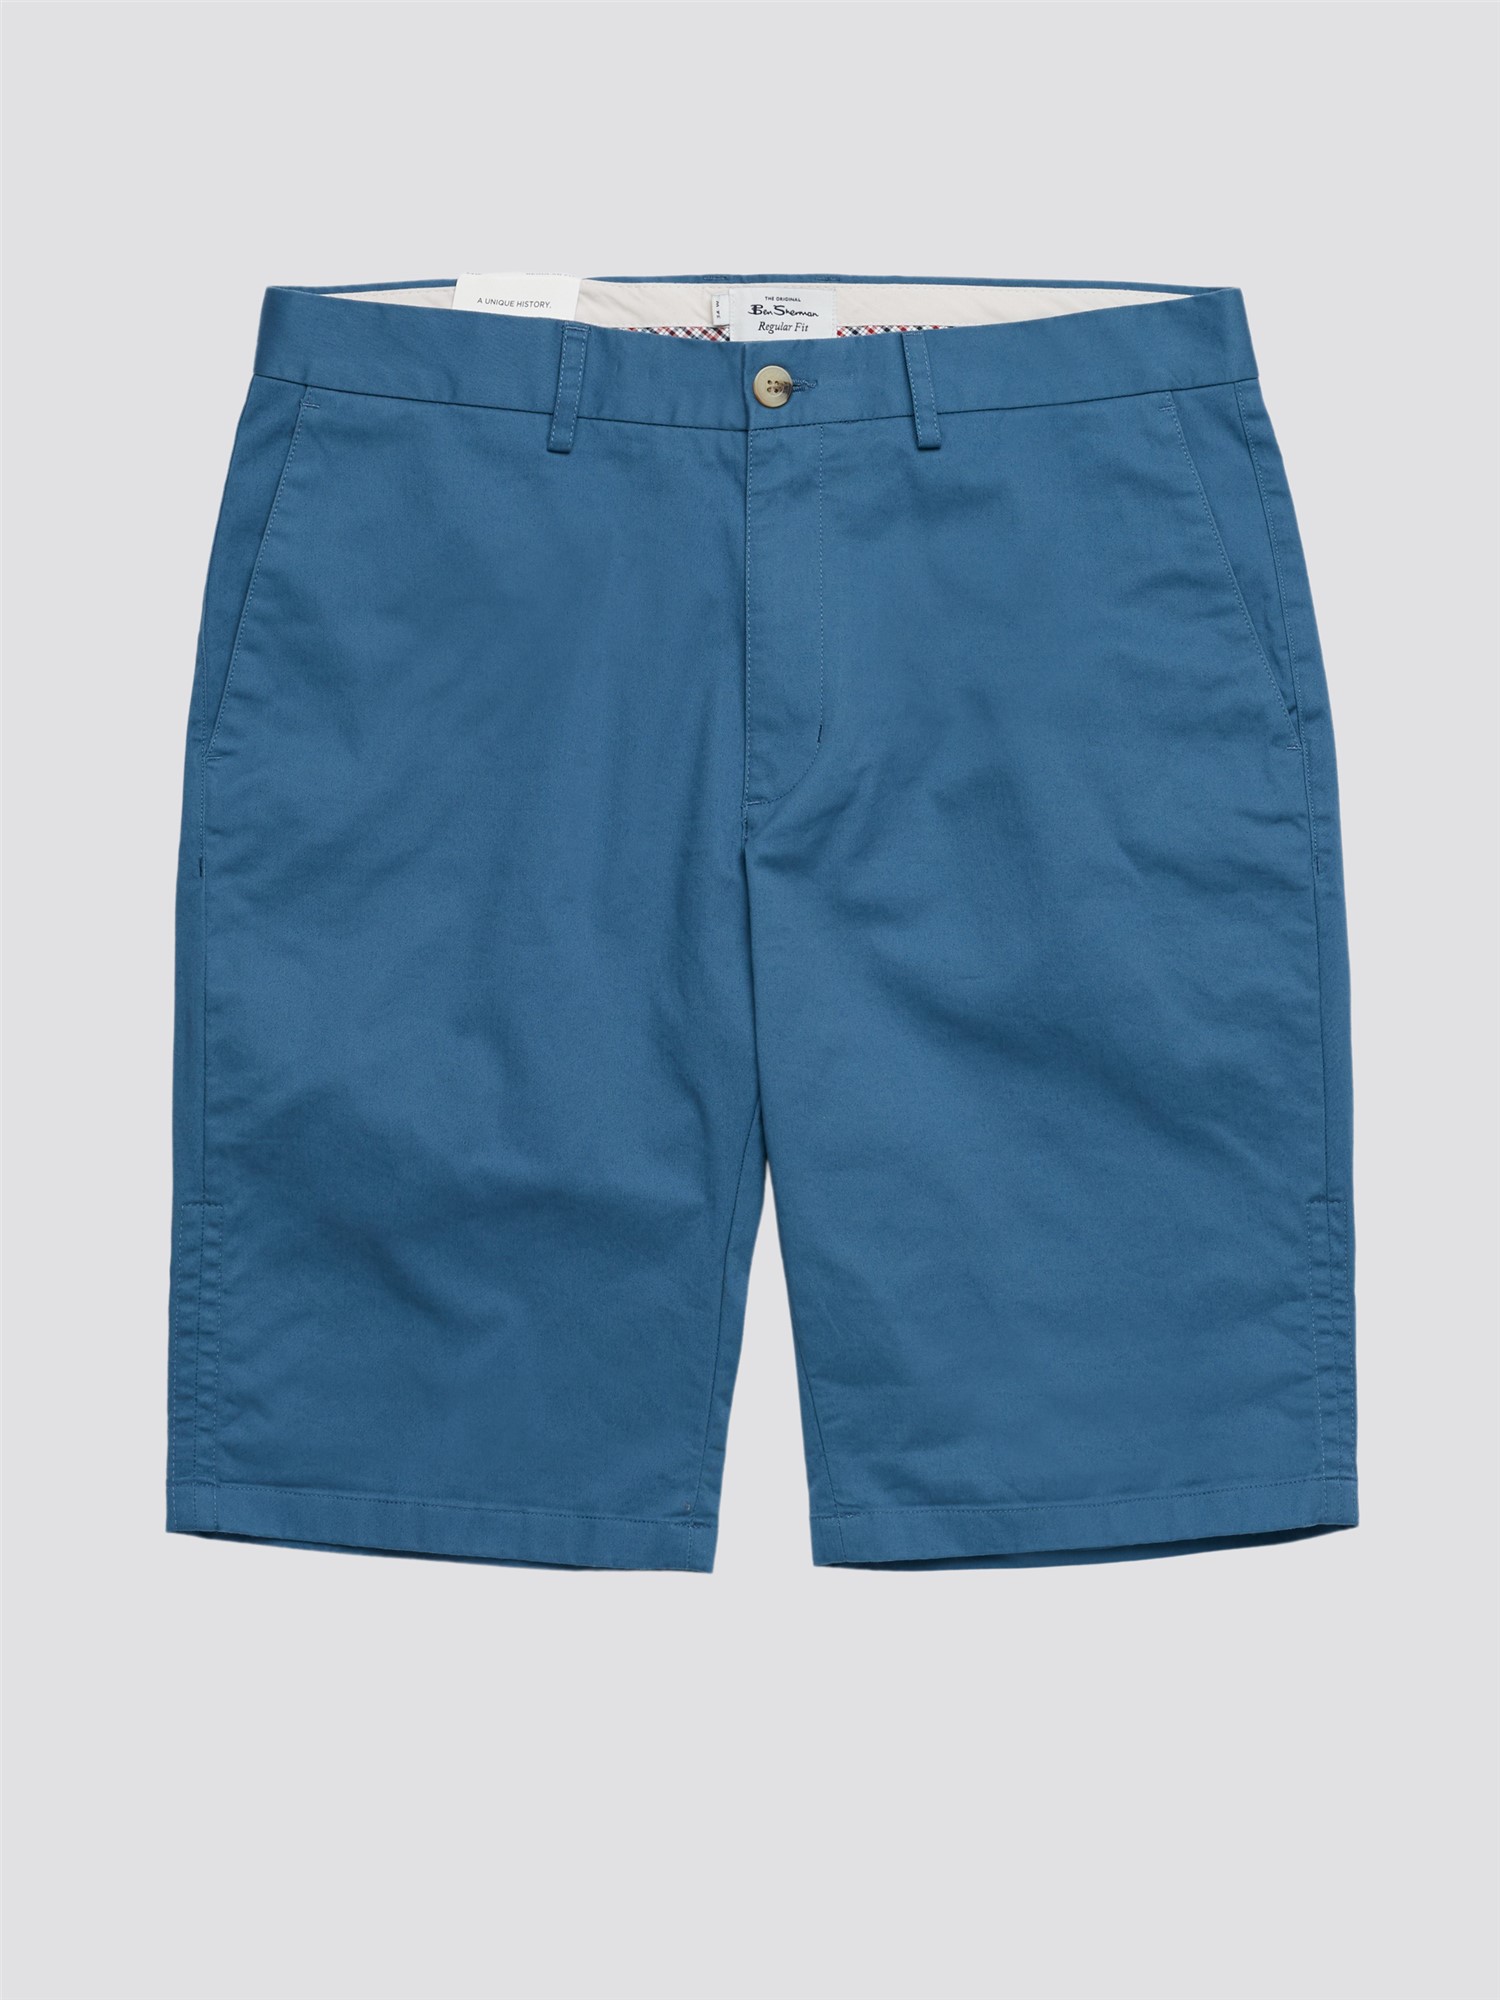 ben-sherman-wedgewood-blue-signature-chino-shorts